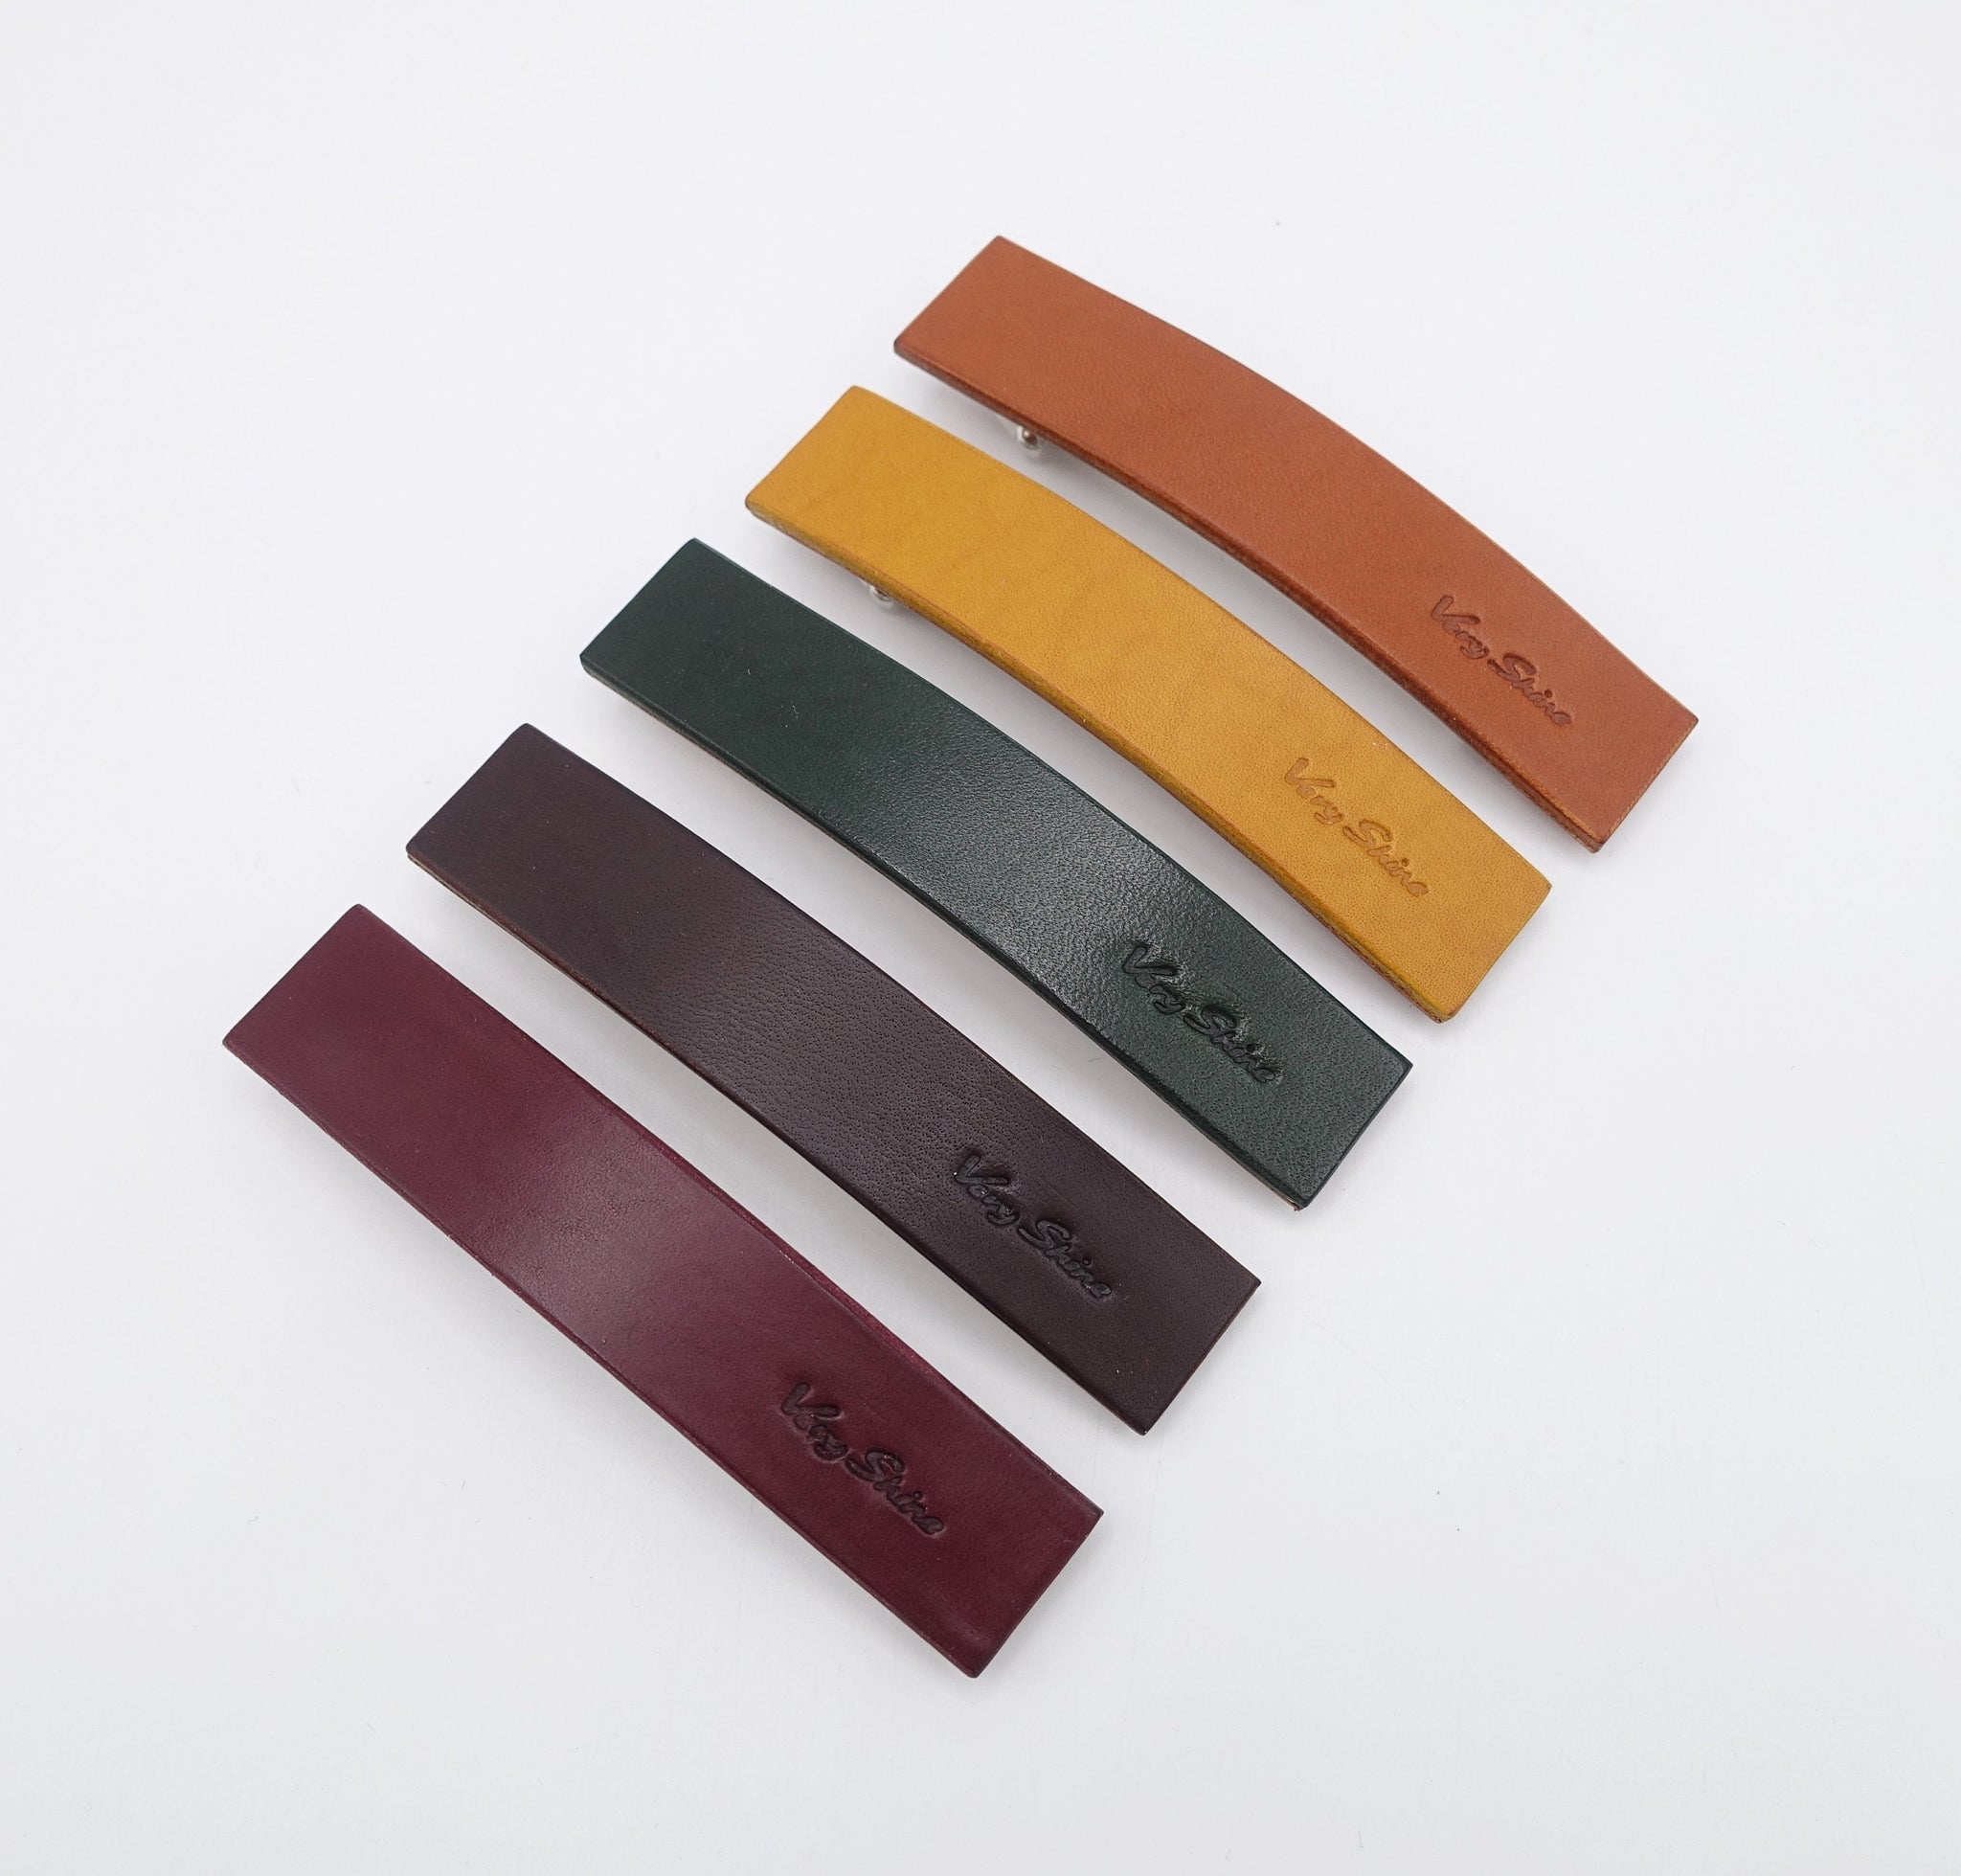 veryshine.com Barrette (Bow) color leather barrette, authentic leather barrette, classic hair accessory for women